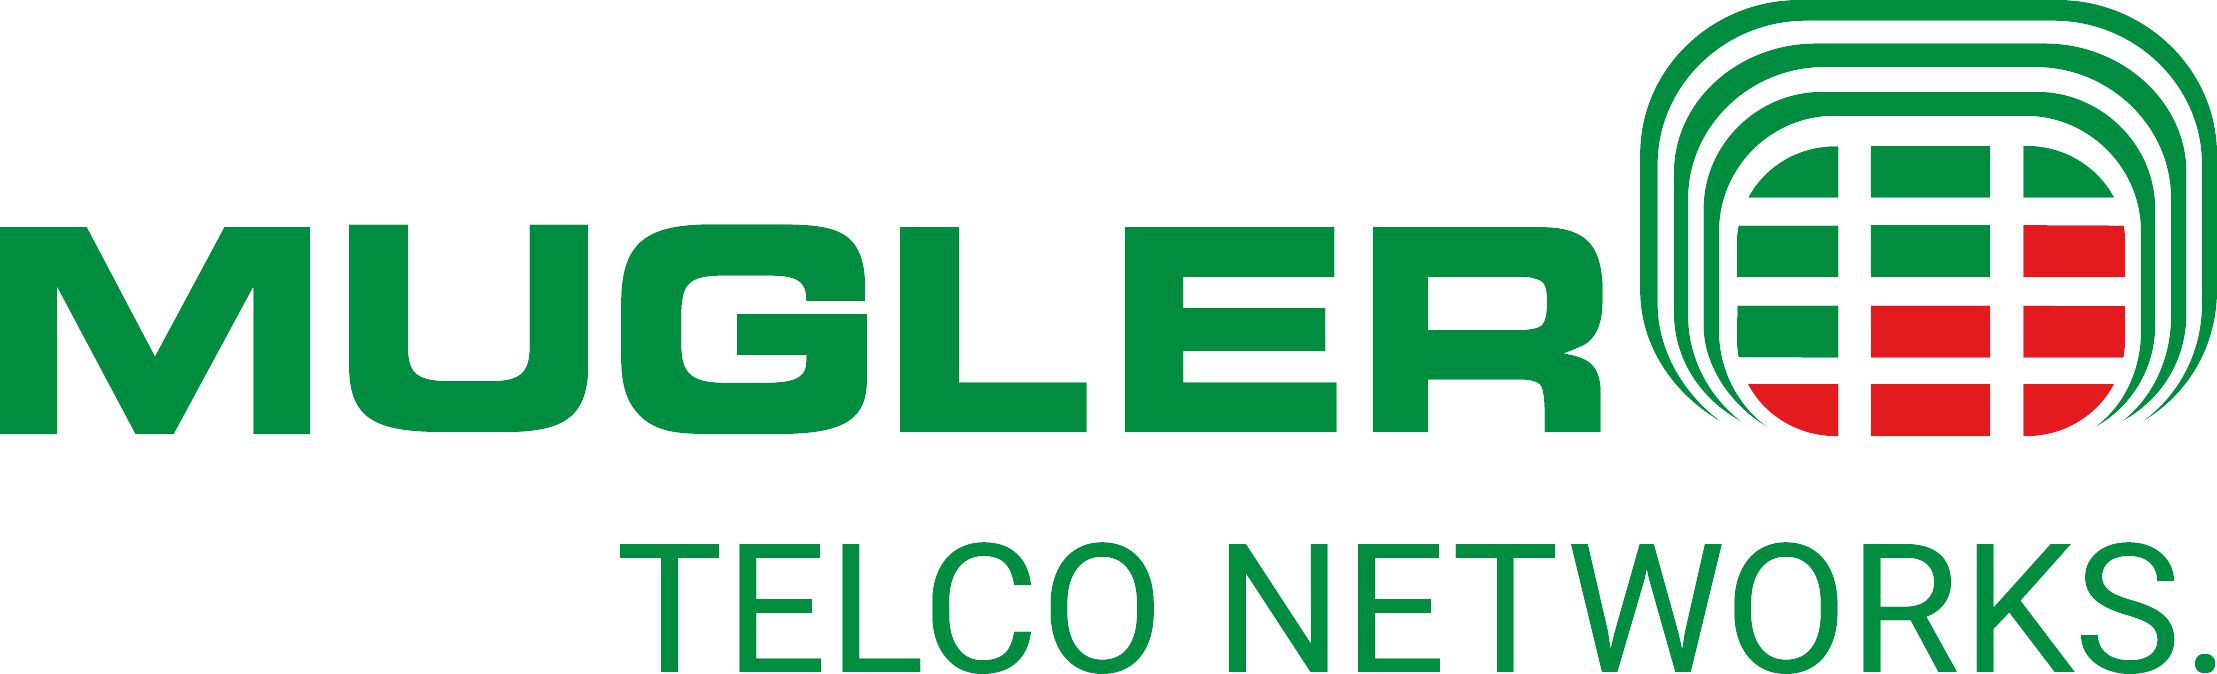 Logo MUGLER AG RGB 100x19mm